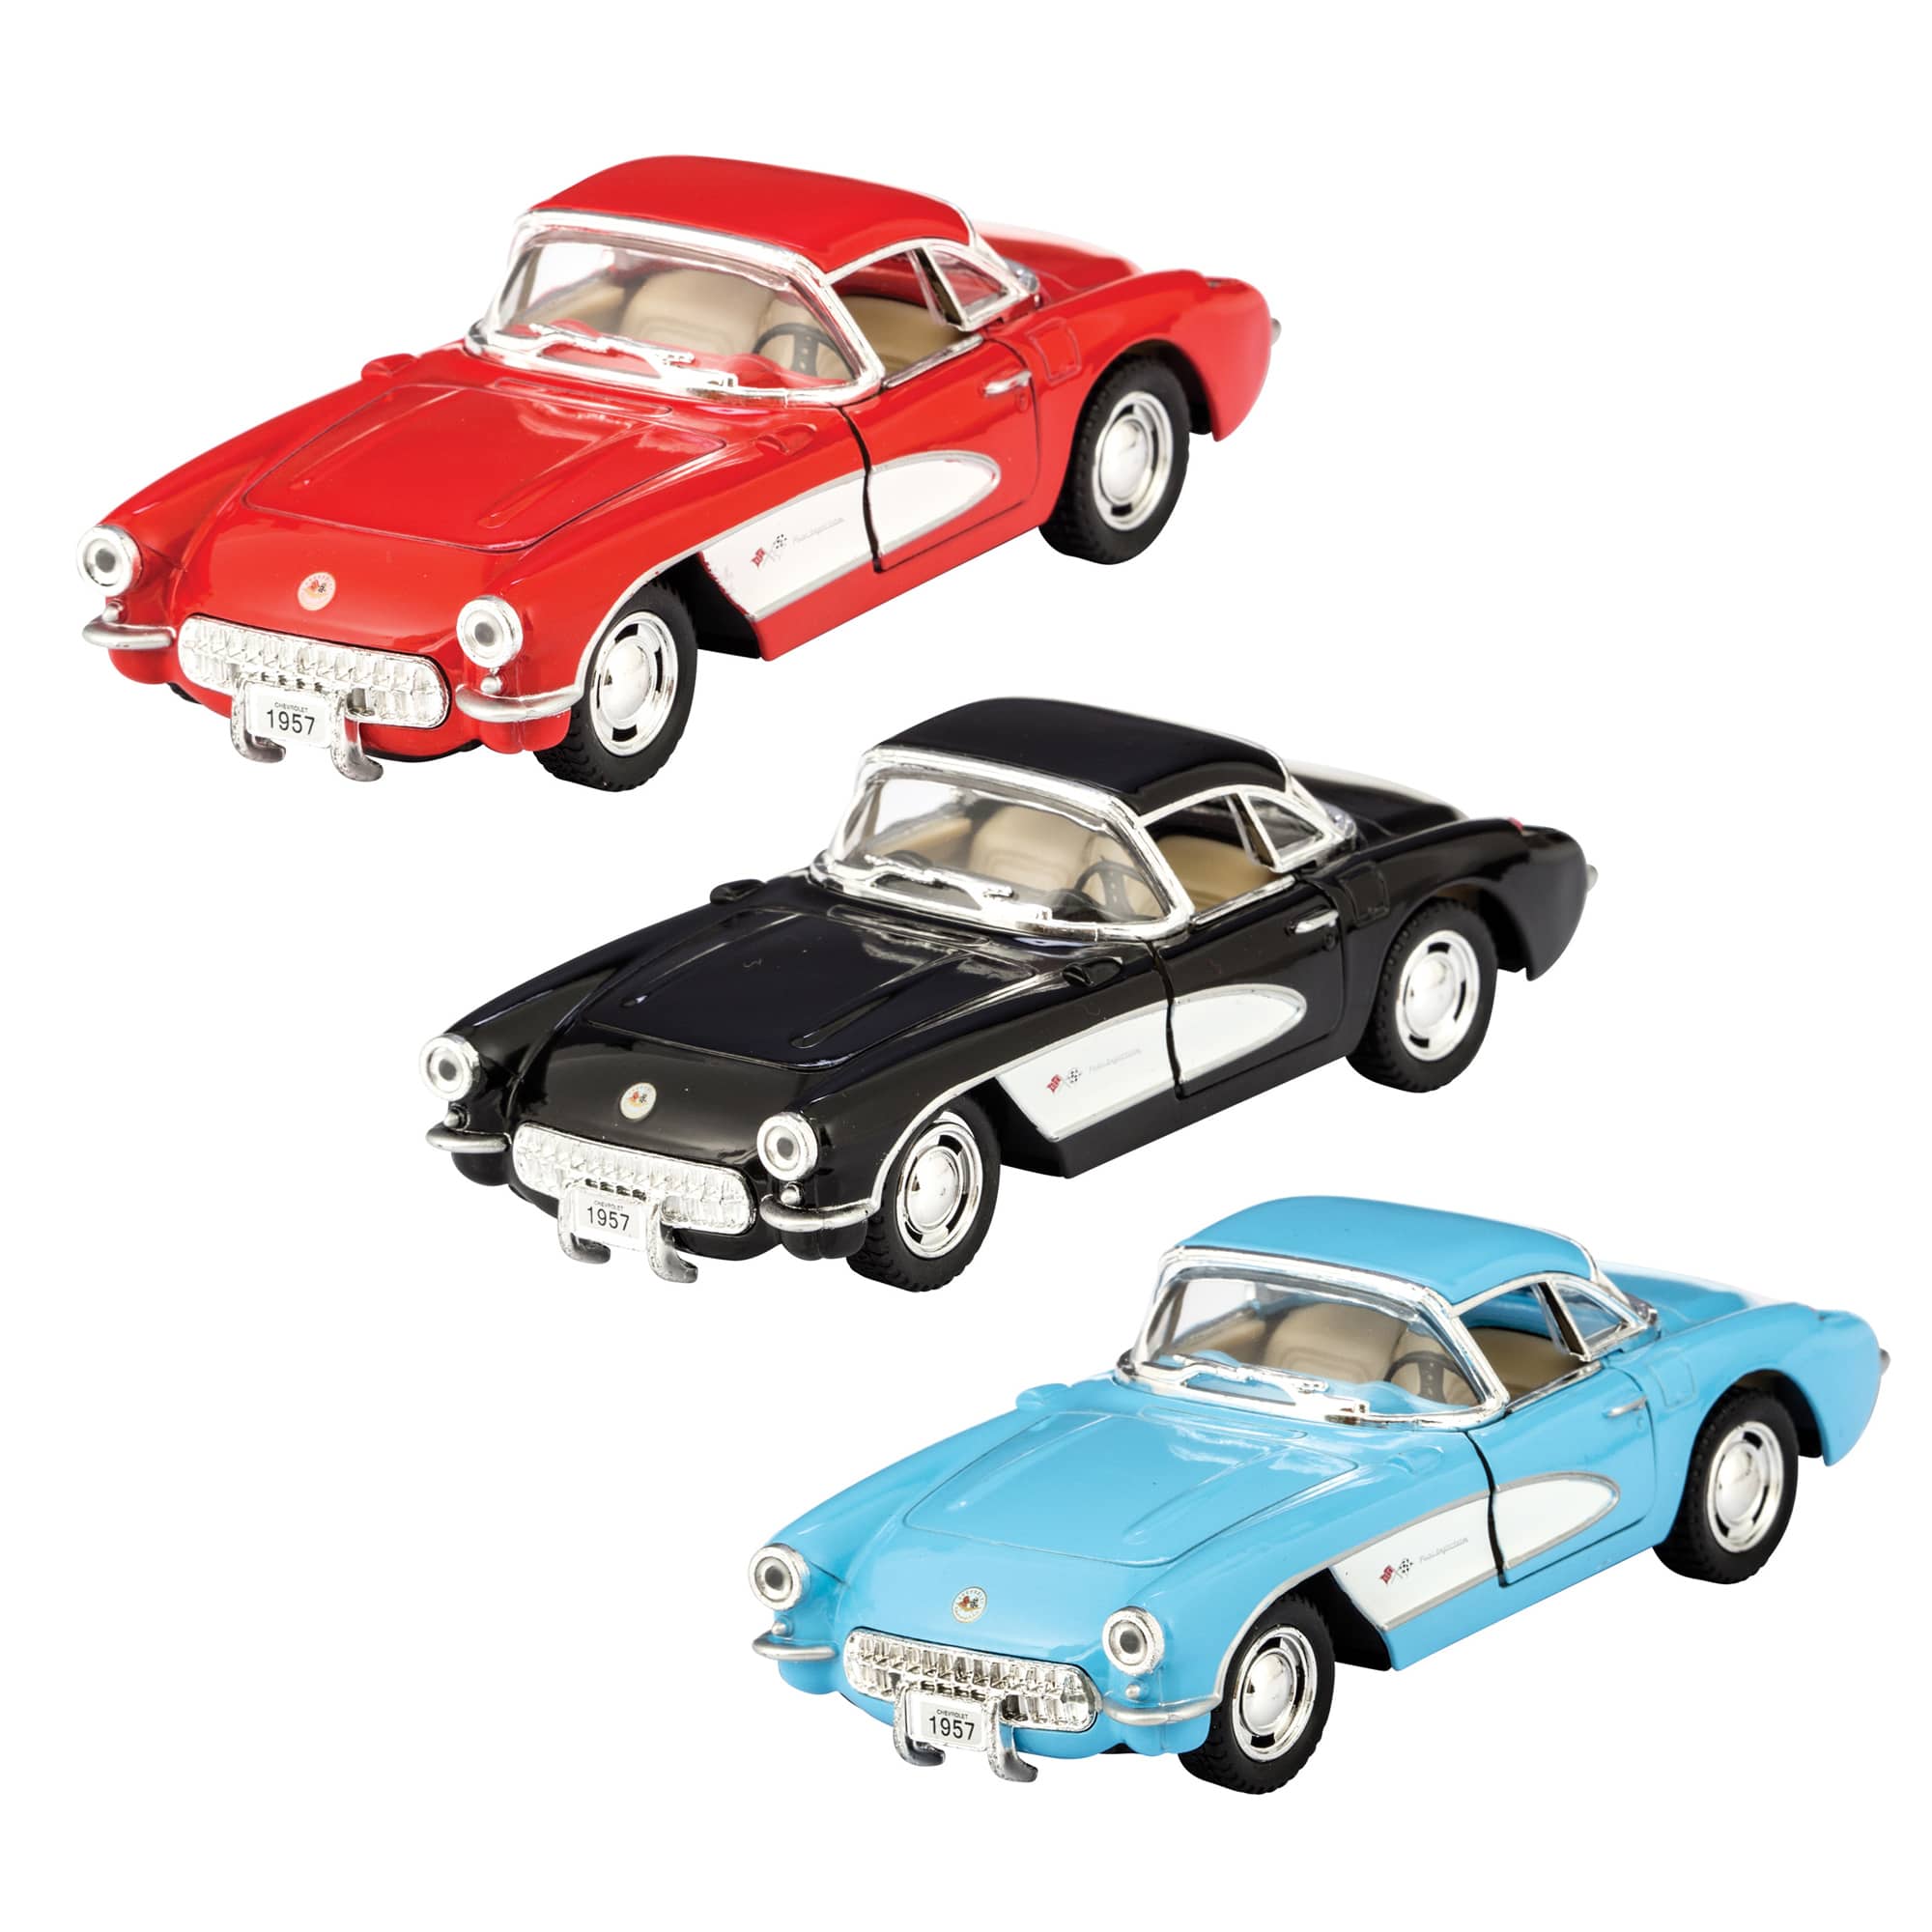 1957 Corvette-Vehicles & Transportation-Yellow Springs Toy Company